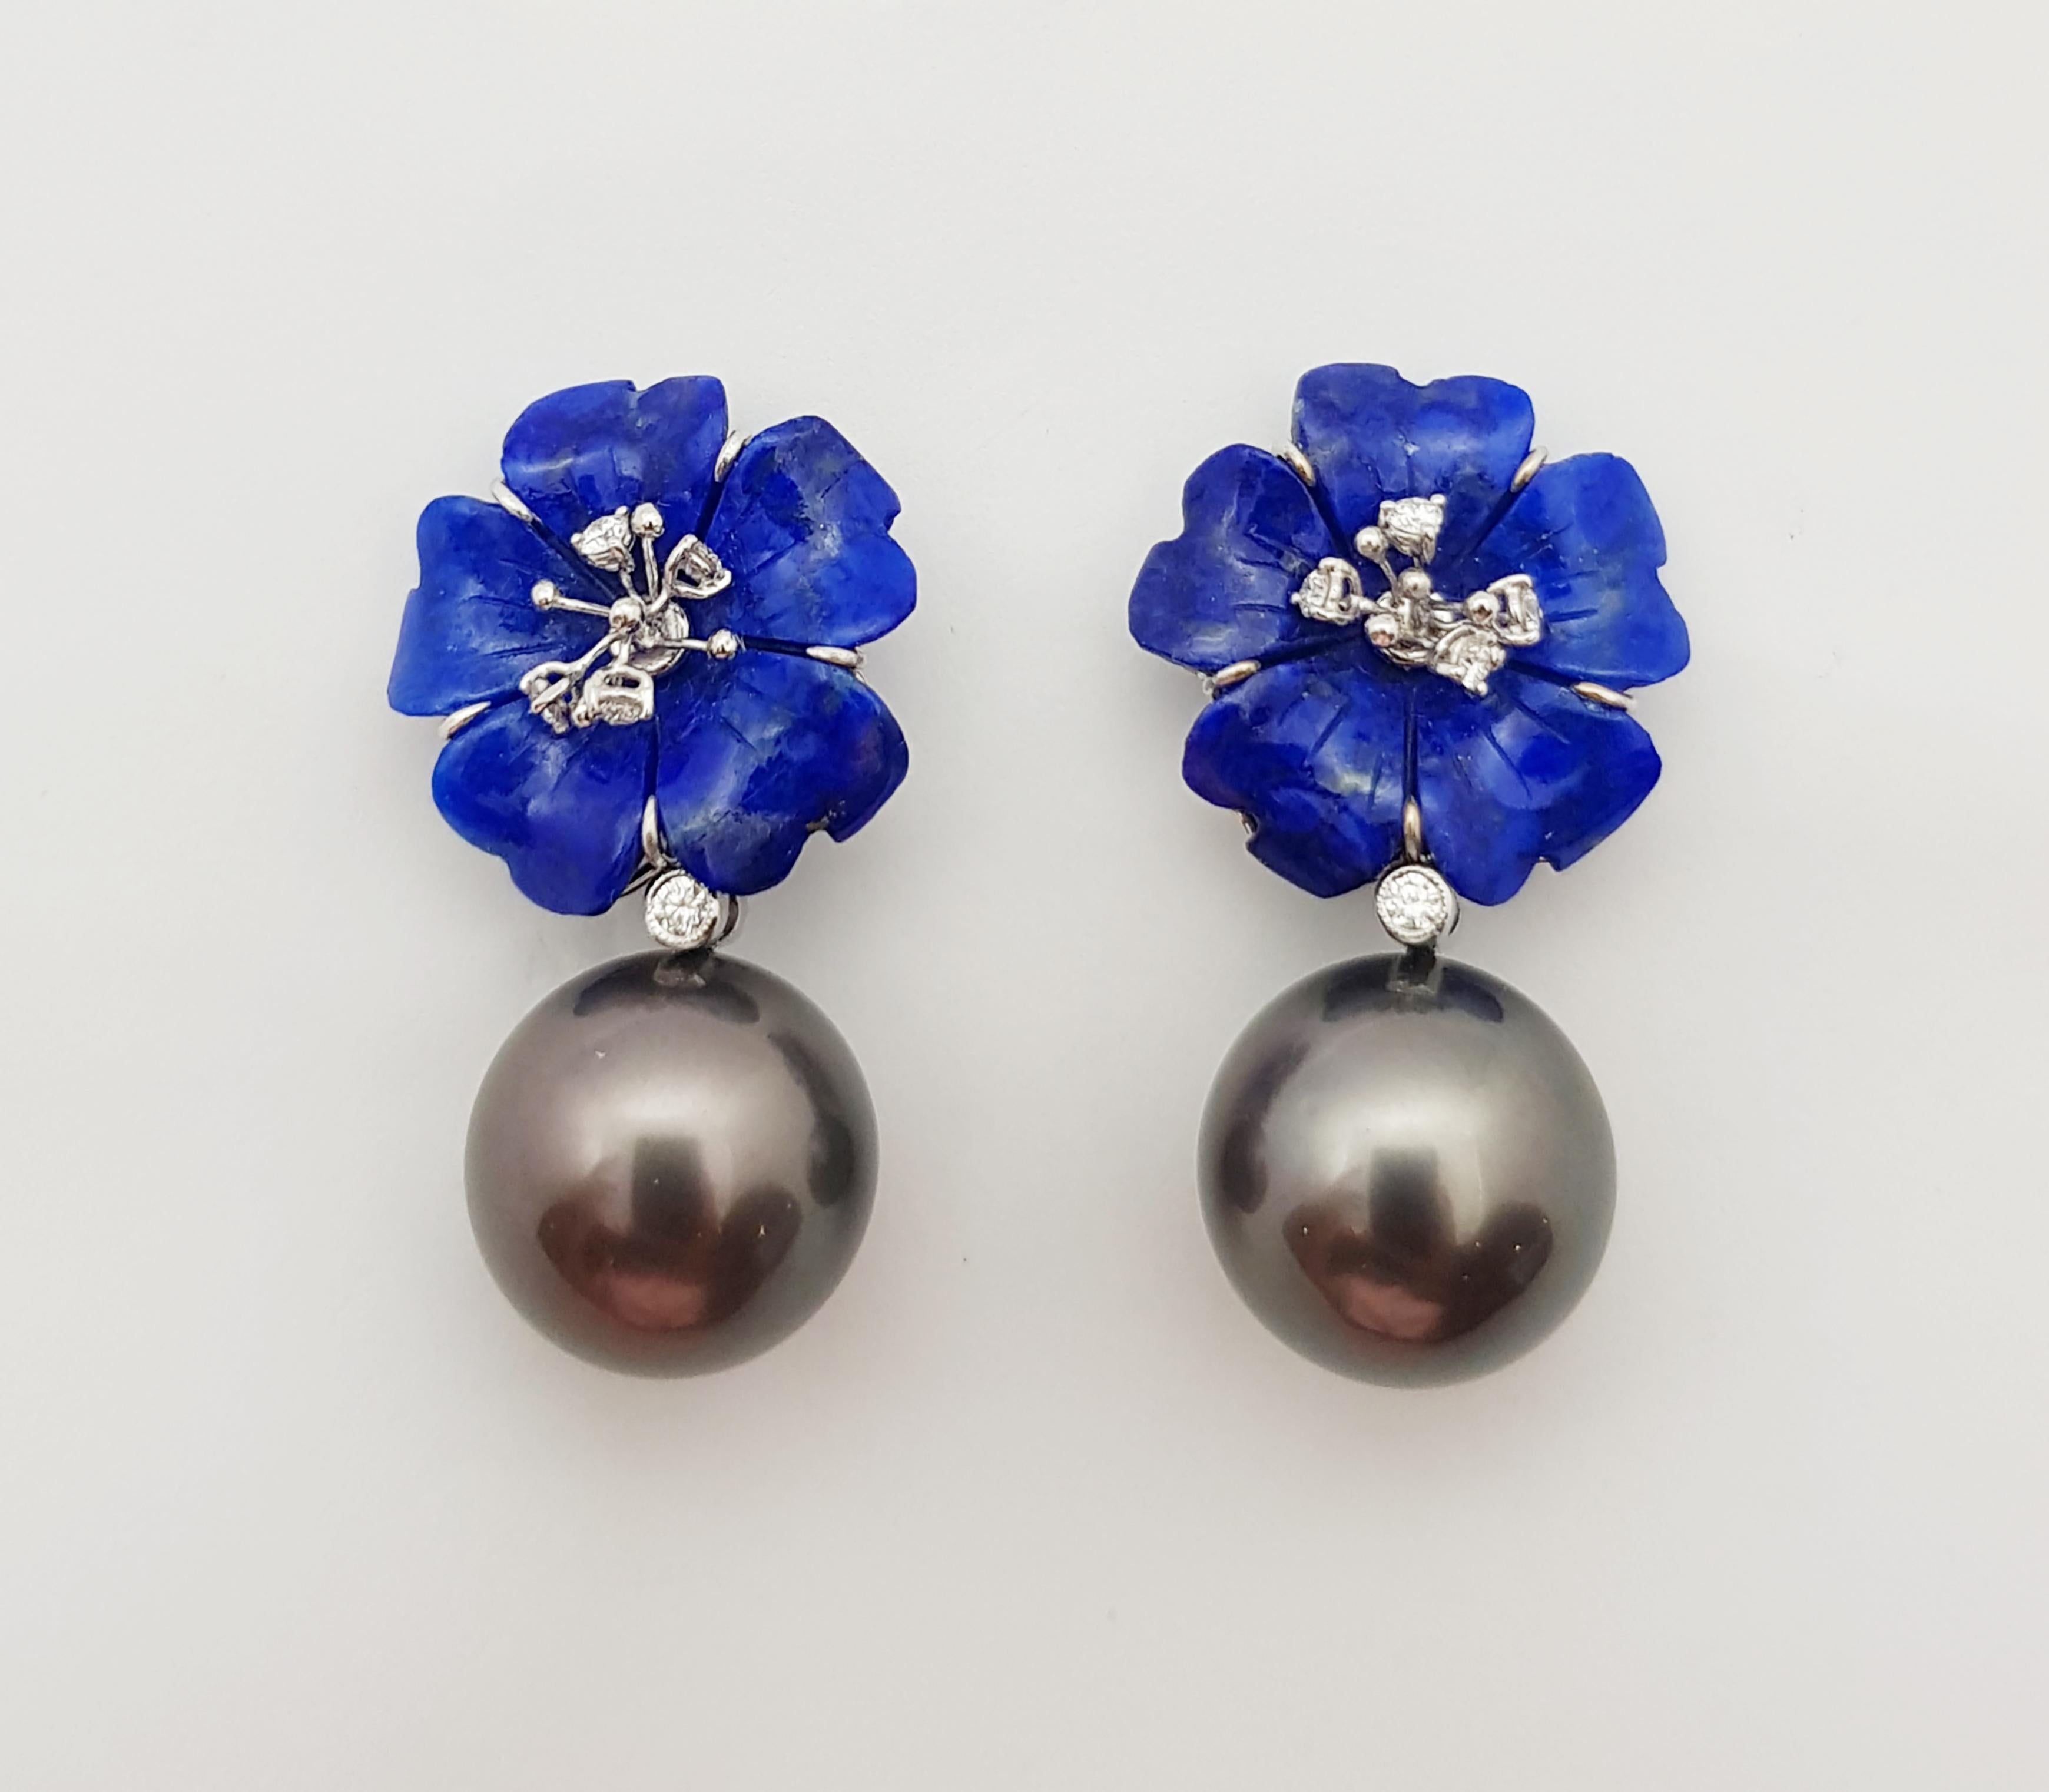 Mixed Cut Tahitian Pearl, Carved Flower Lapiz Lazuli, Diamond Earrings in 18K White Gold For Sale